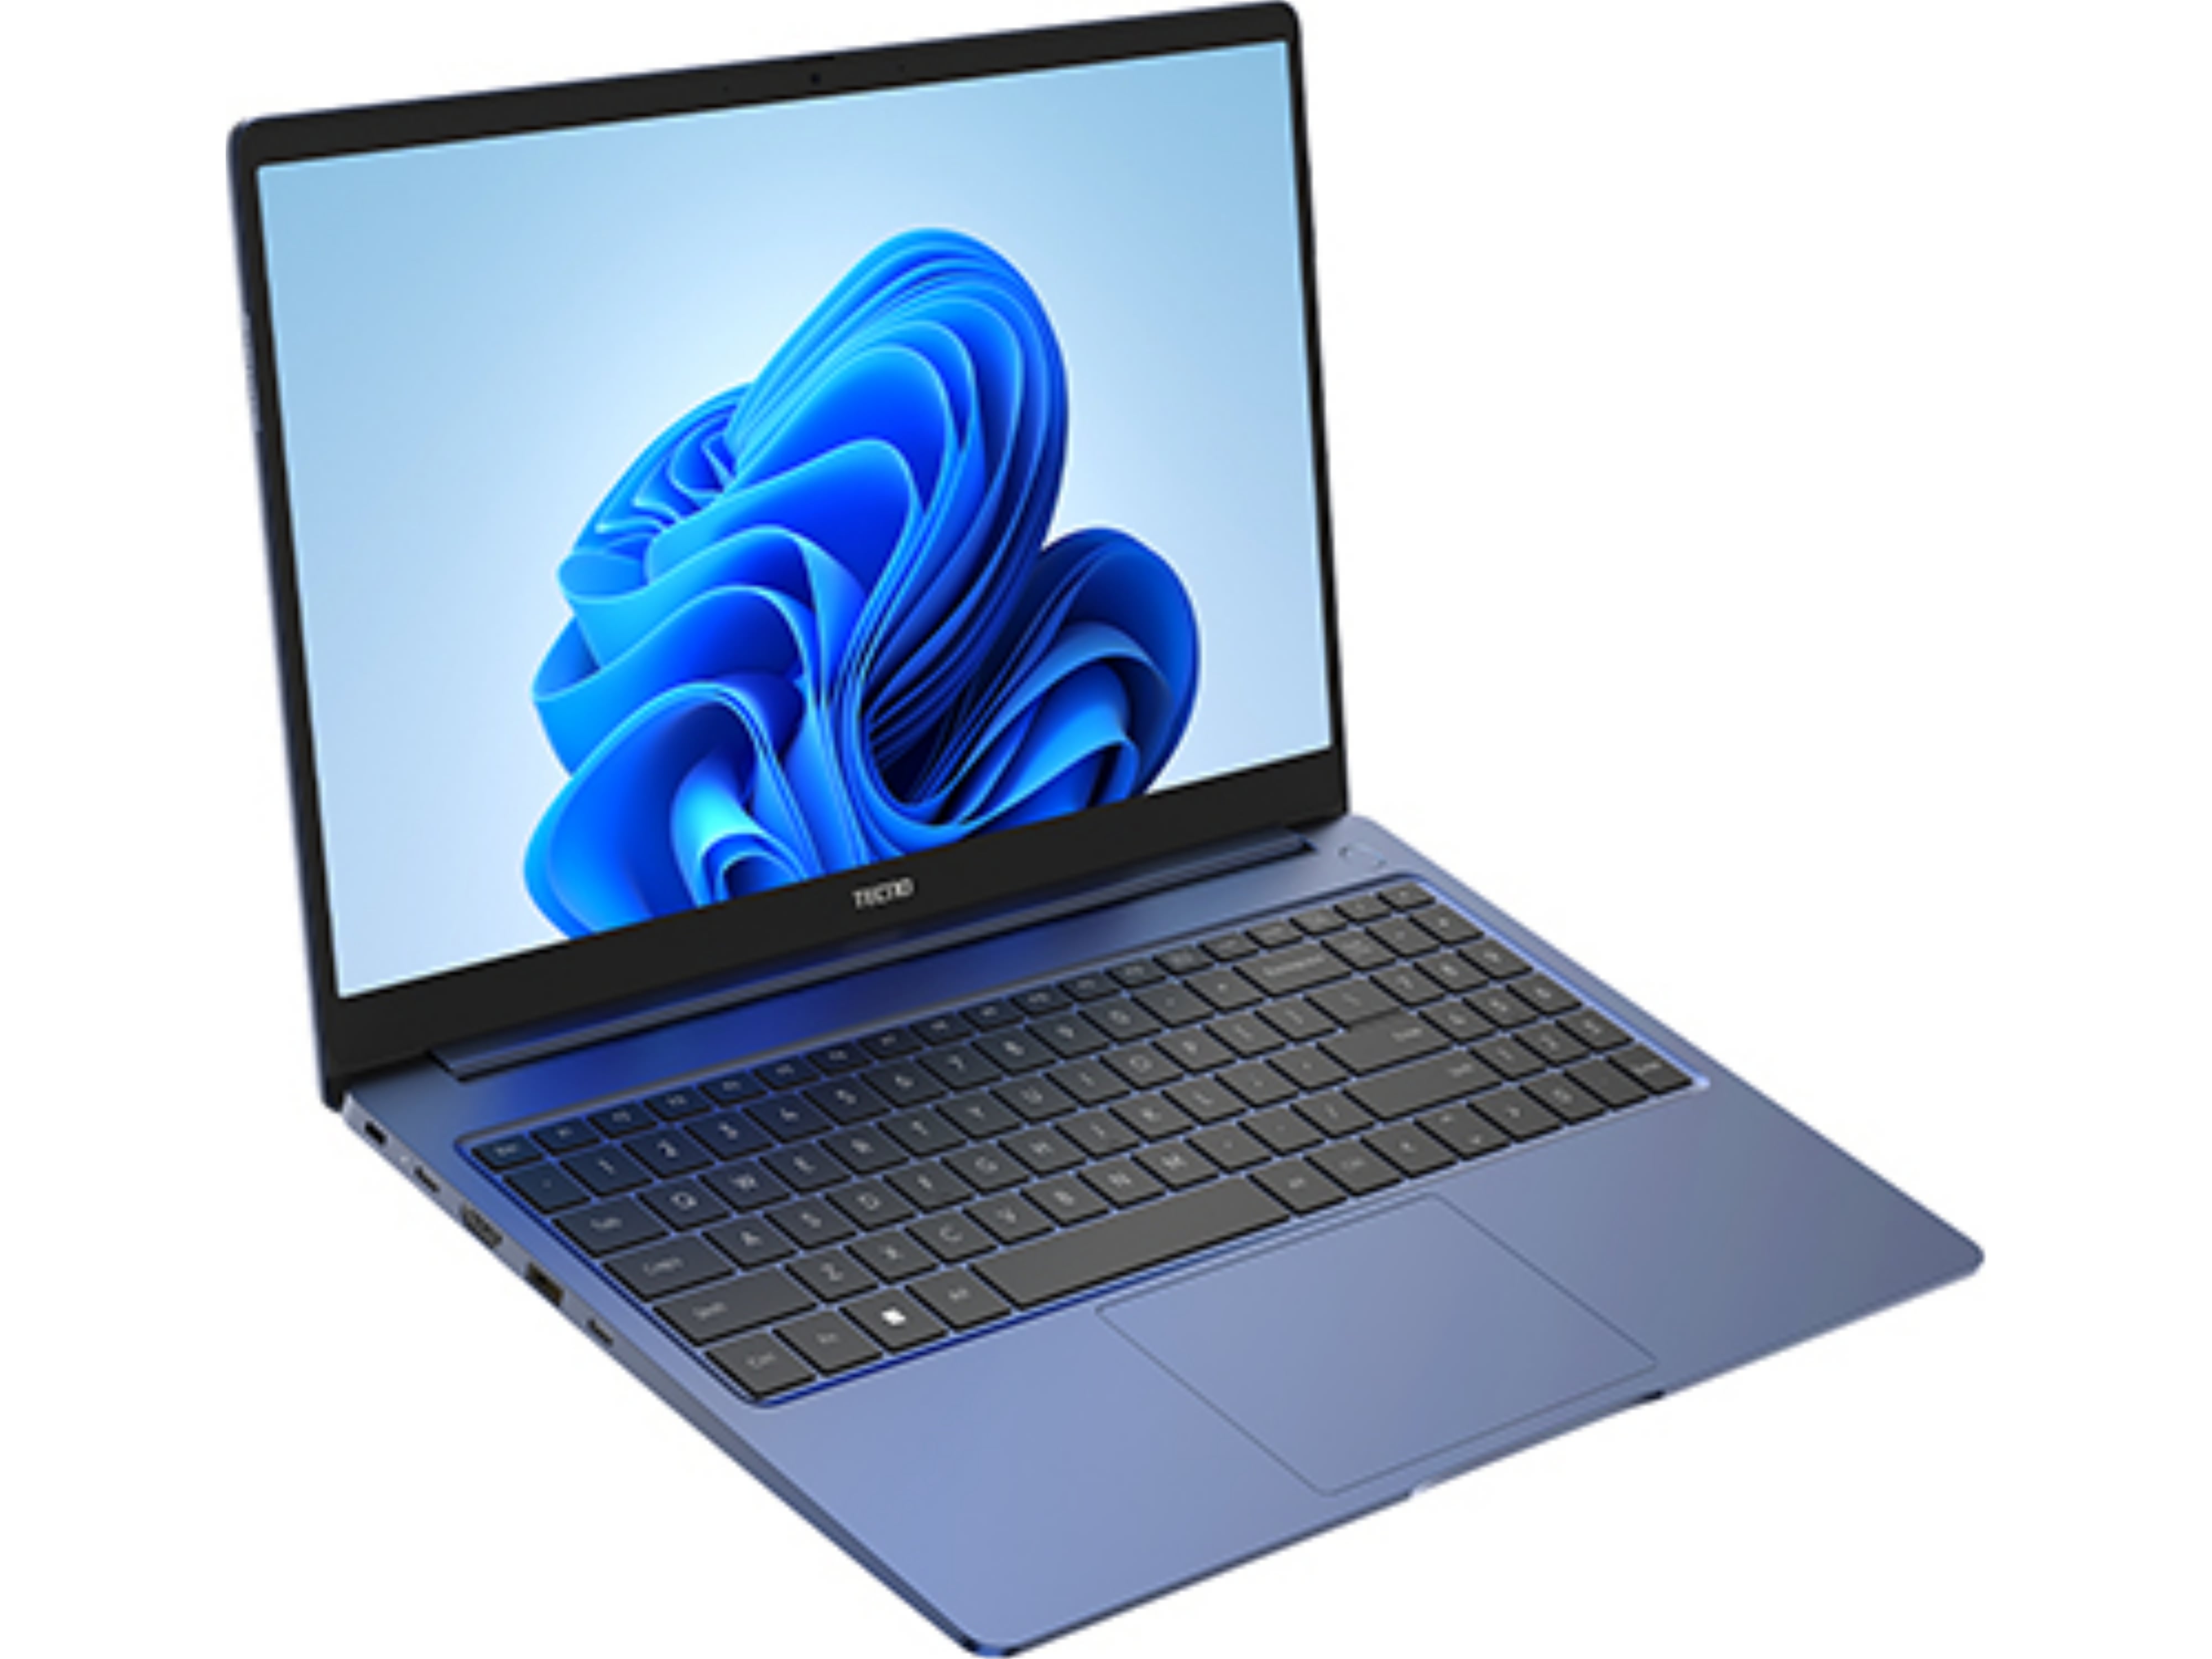 Tecno megabook t1 16gb. Ноутбук Techno MEGABOOK t1 15.6. Tecno t1 i5 16+512g. Techno MEGABOOK t1 i5. Ноутбук Tecno MEGABOOK t1 синий.